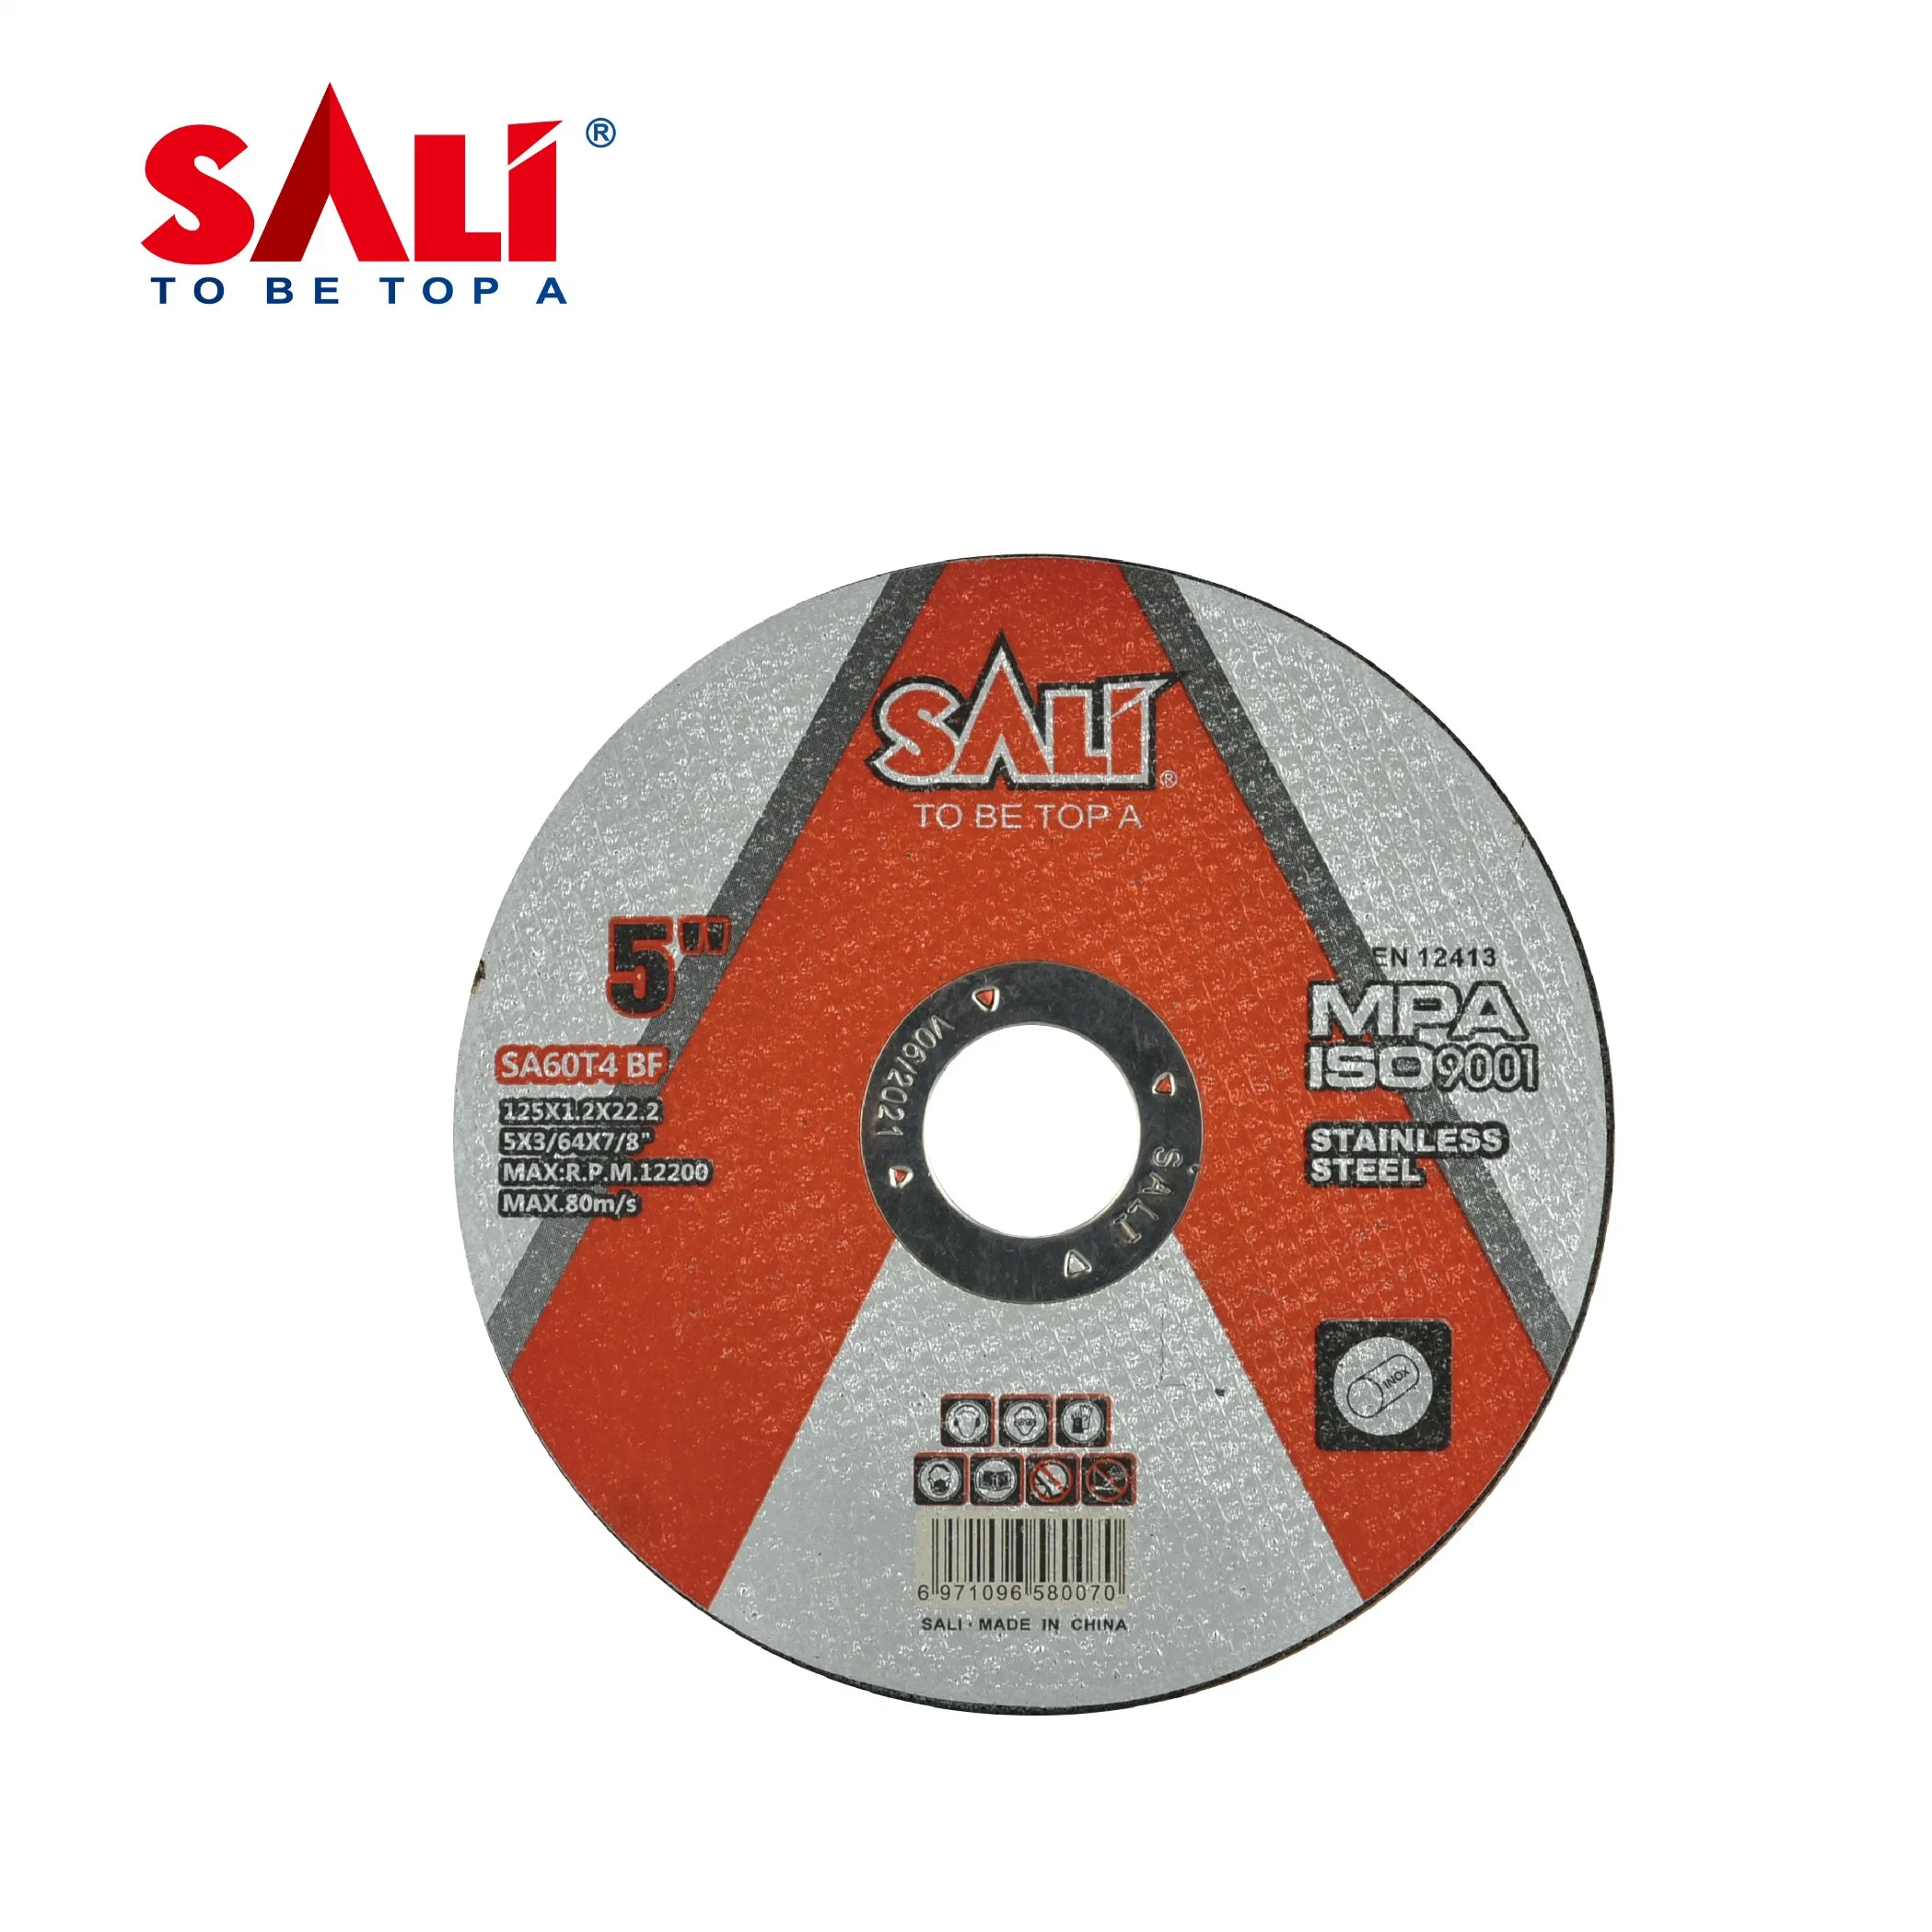 Abrasive resin Reinforced Cutting Wheel with MPa Certifiacte